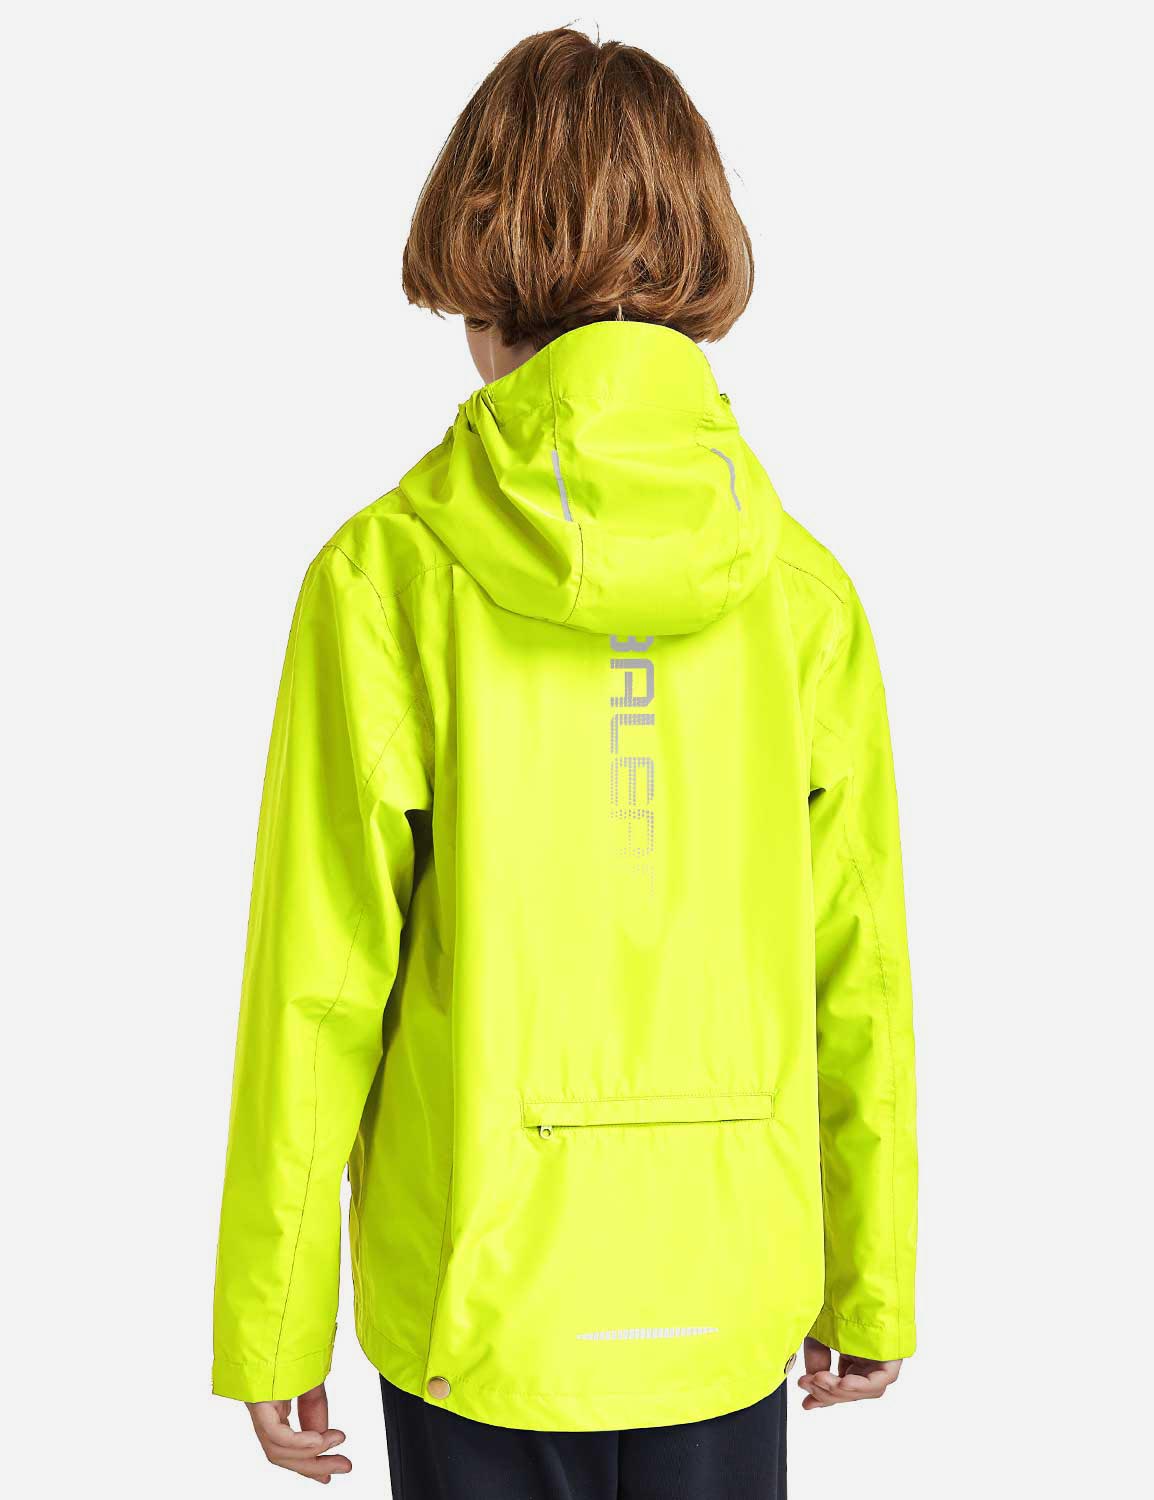 Baleaf Kid's Waterproof Outdoor Hooded Cycling Rain Jacket cai037 Yellow Back